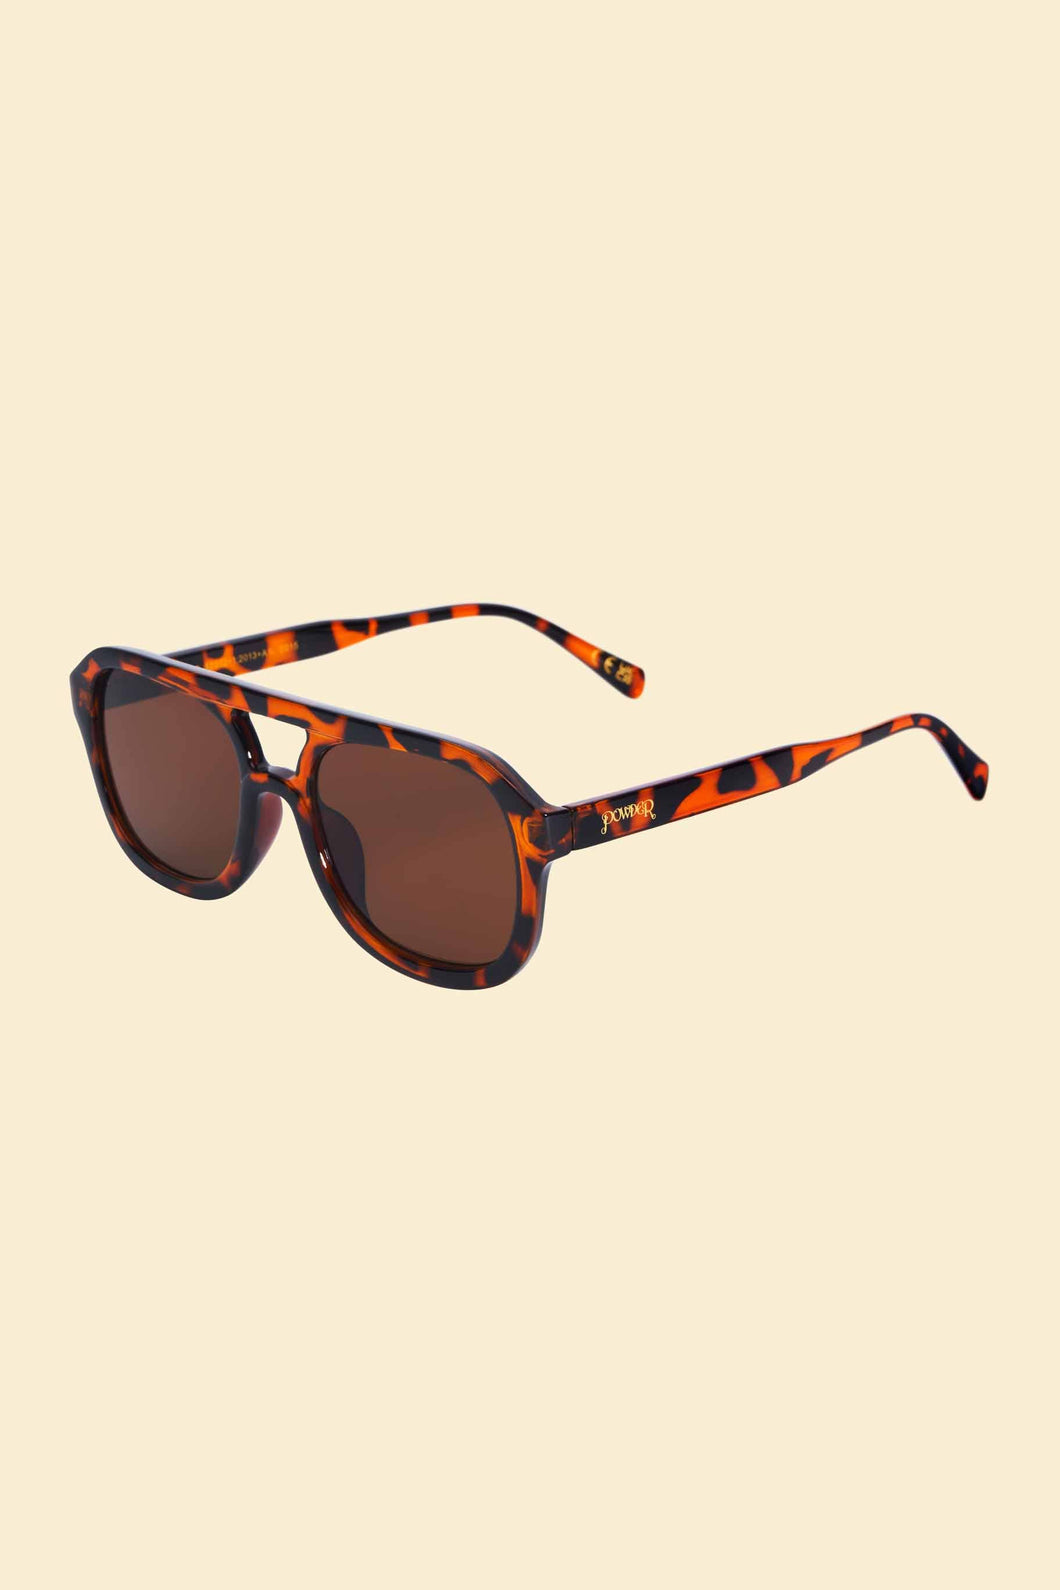 Limited Edition Rosaria - Tortoiseshell Sunglasses